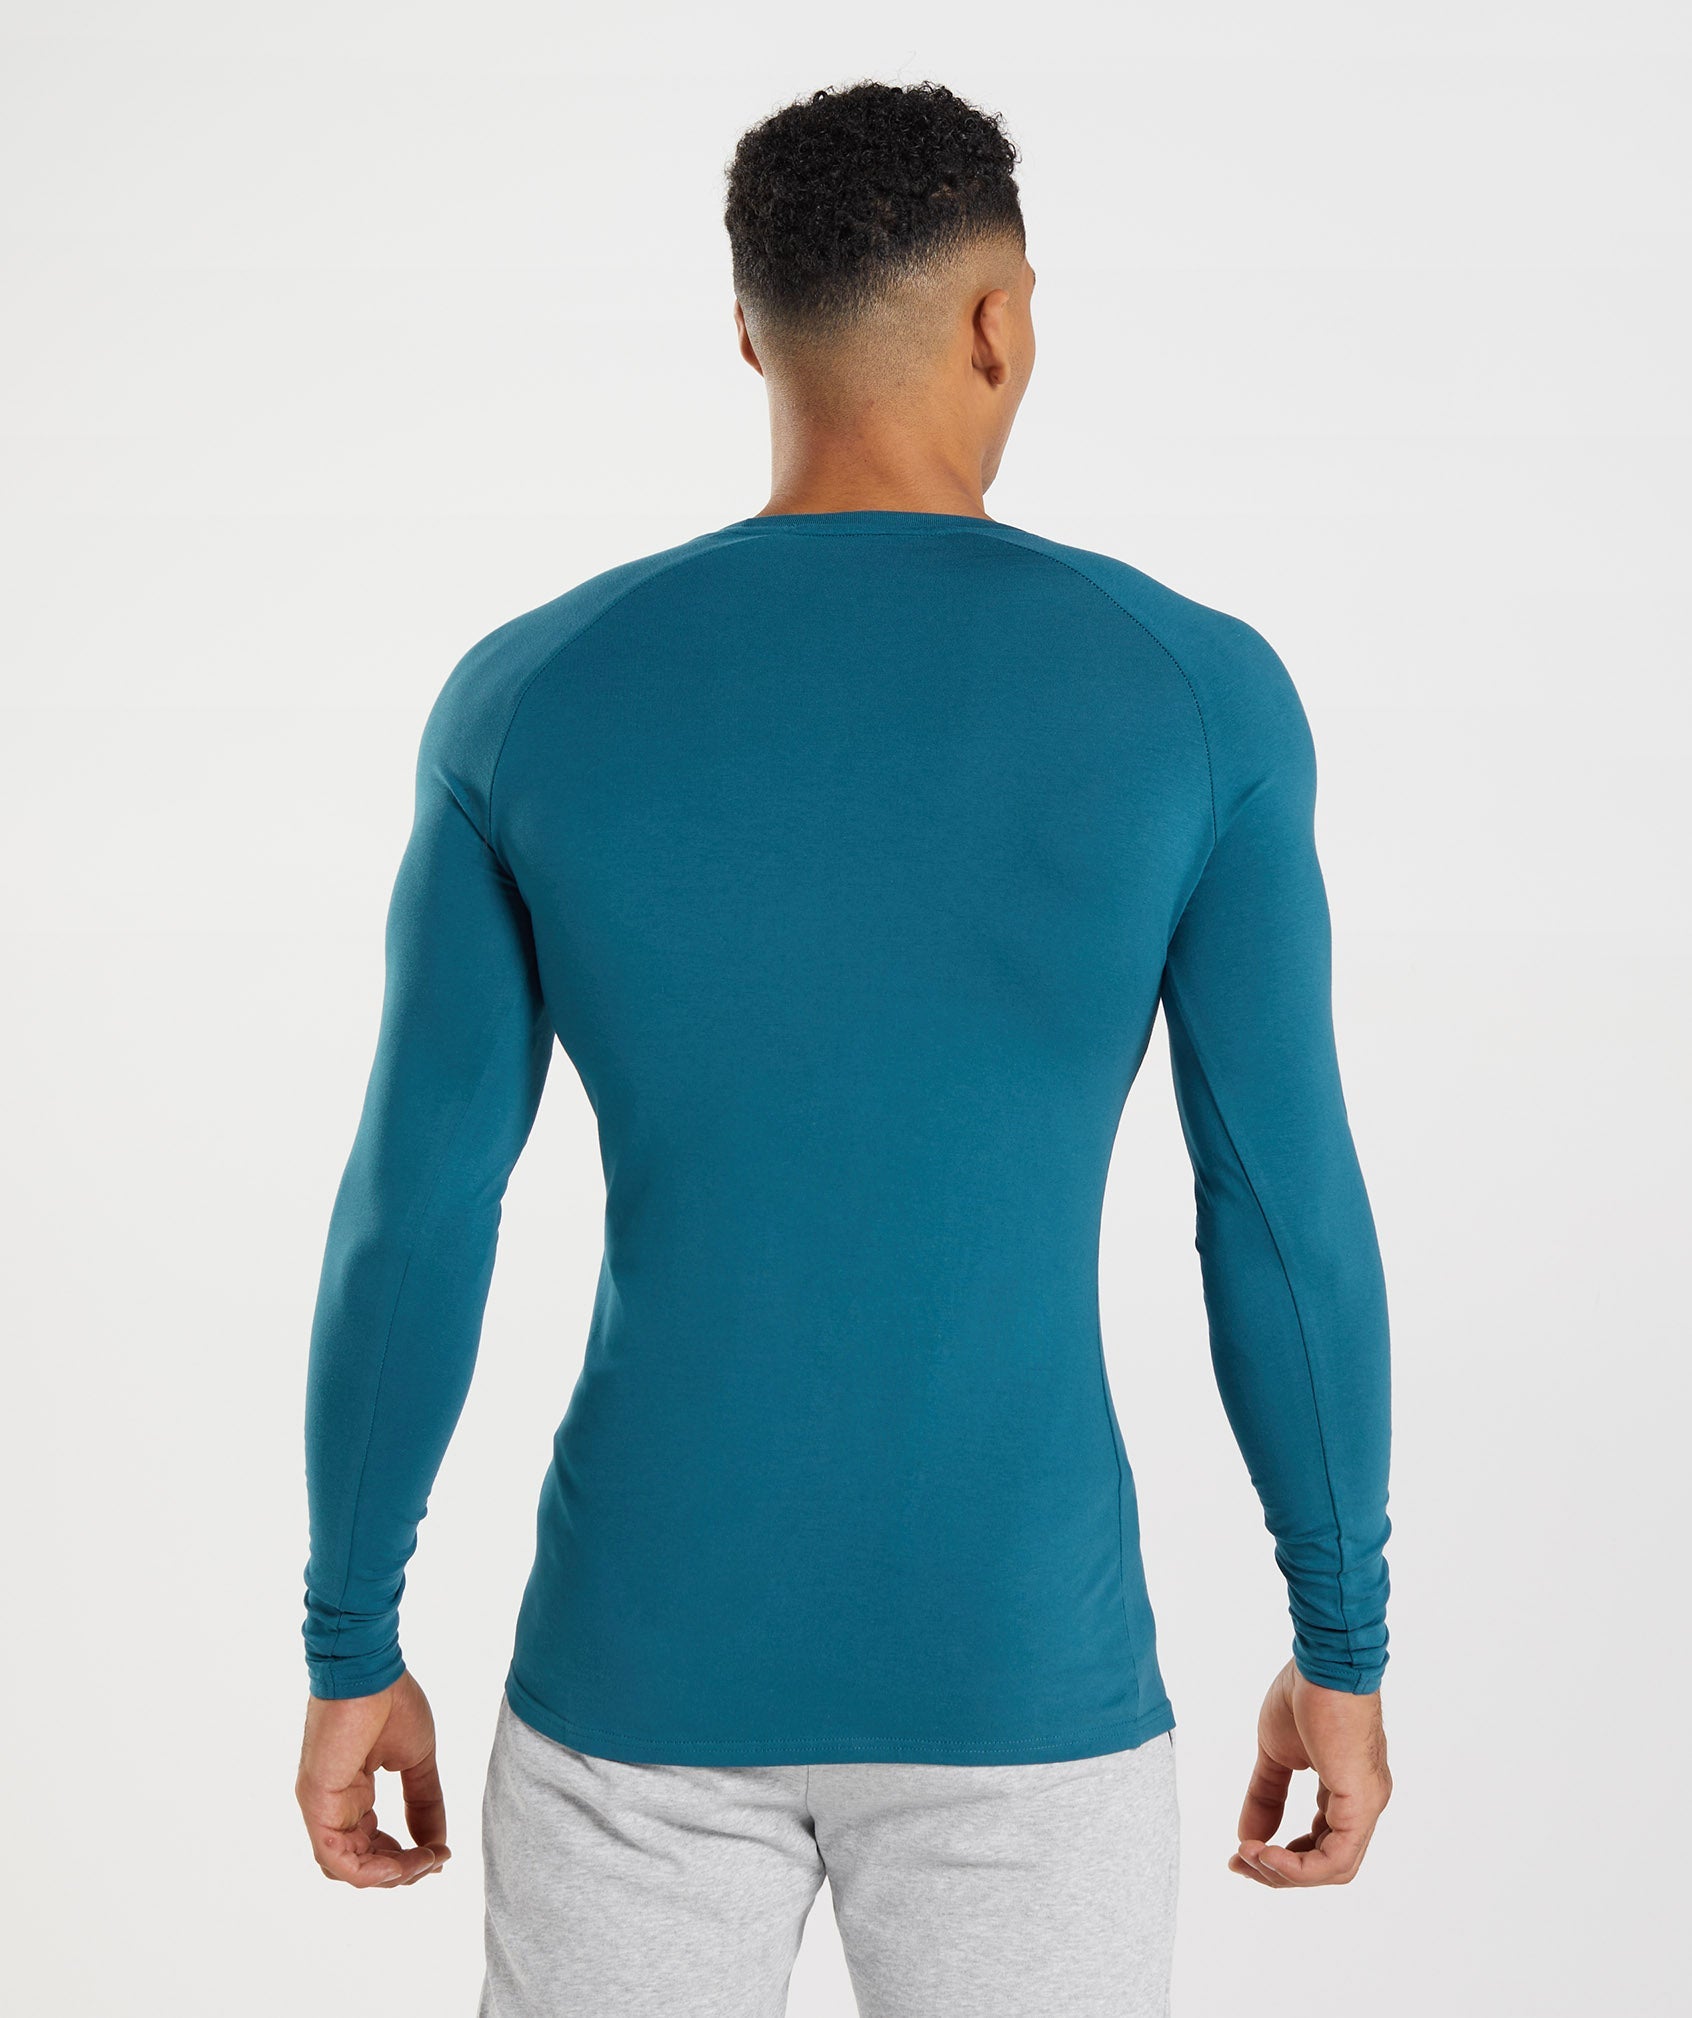 Apollo Long Sleeve T-Shirt in Atlantic Blue